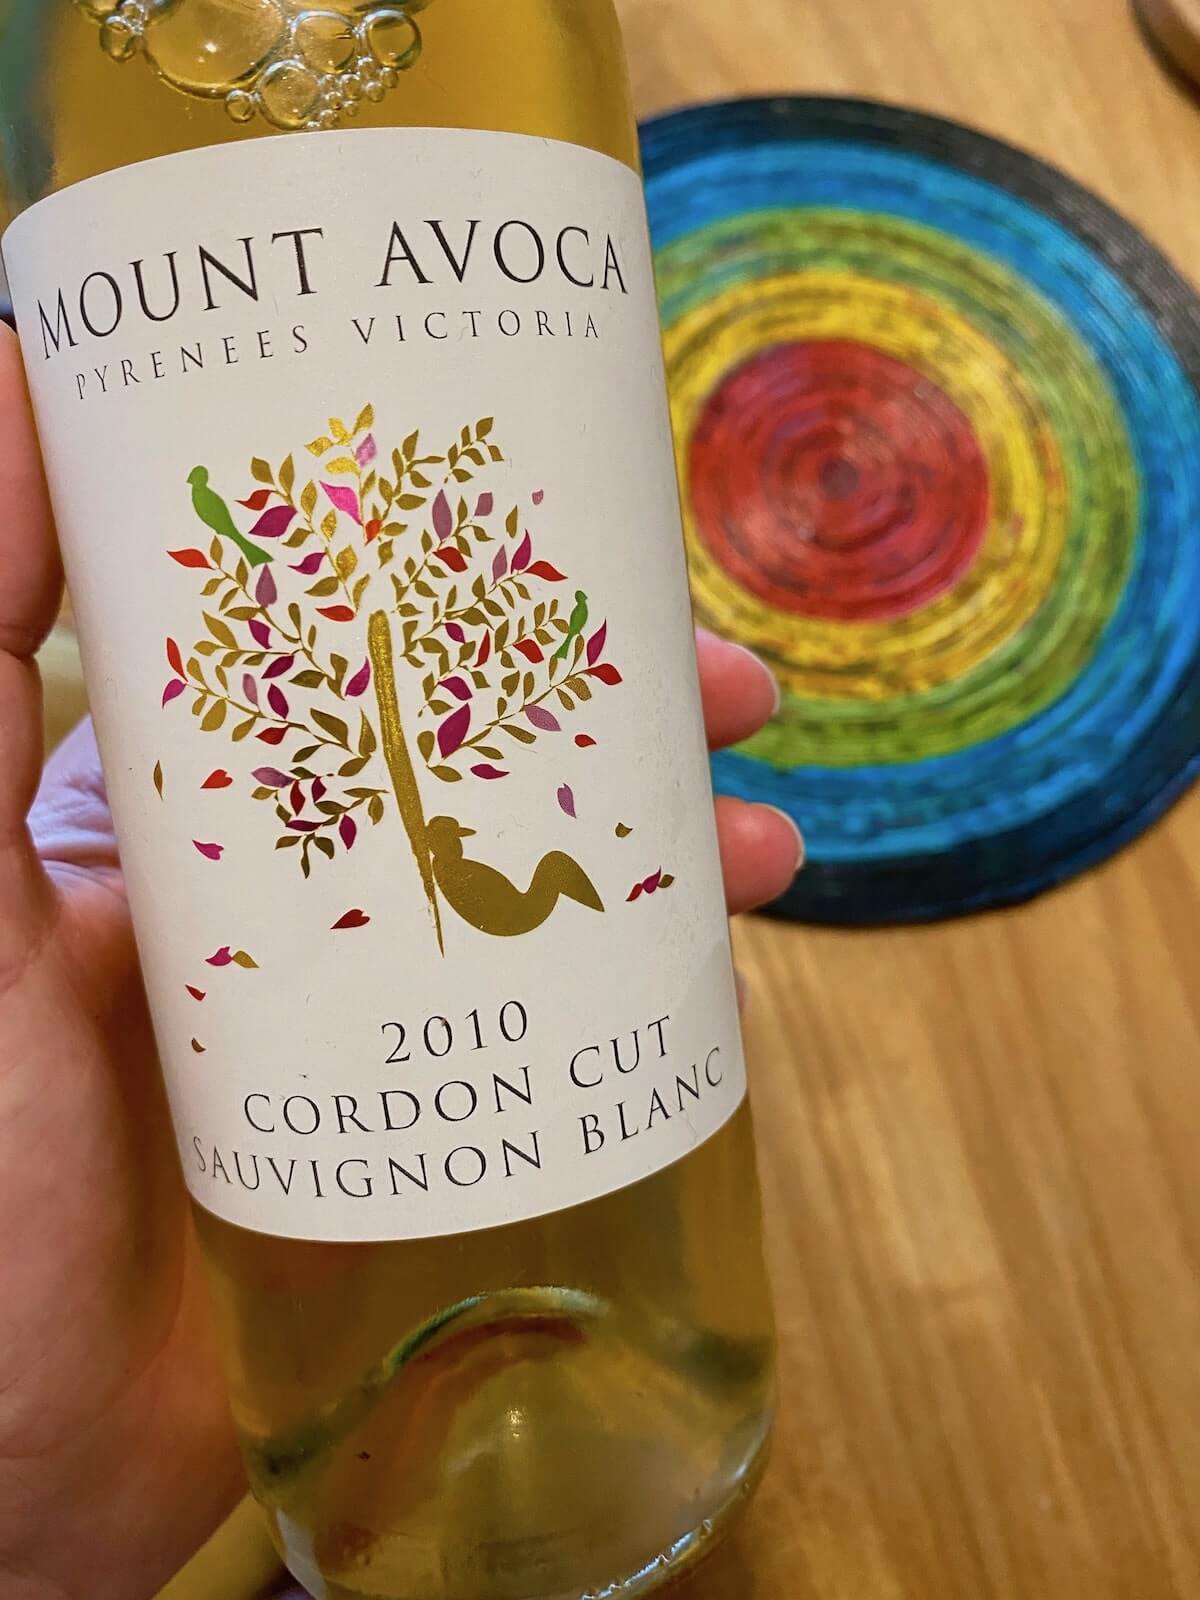 Mount Avoca 2010 Cordon Cut Sauvignon Blanc Dessert Wine - Pyrenees Victoria